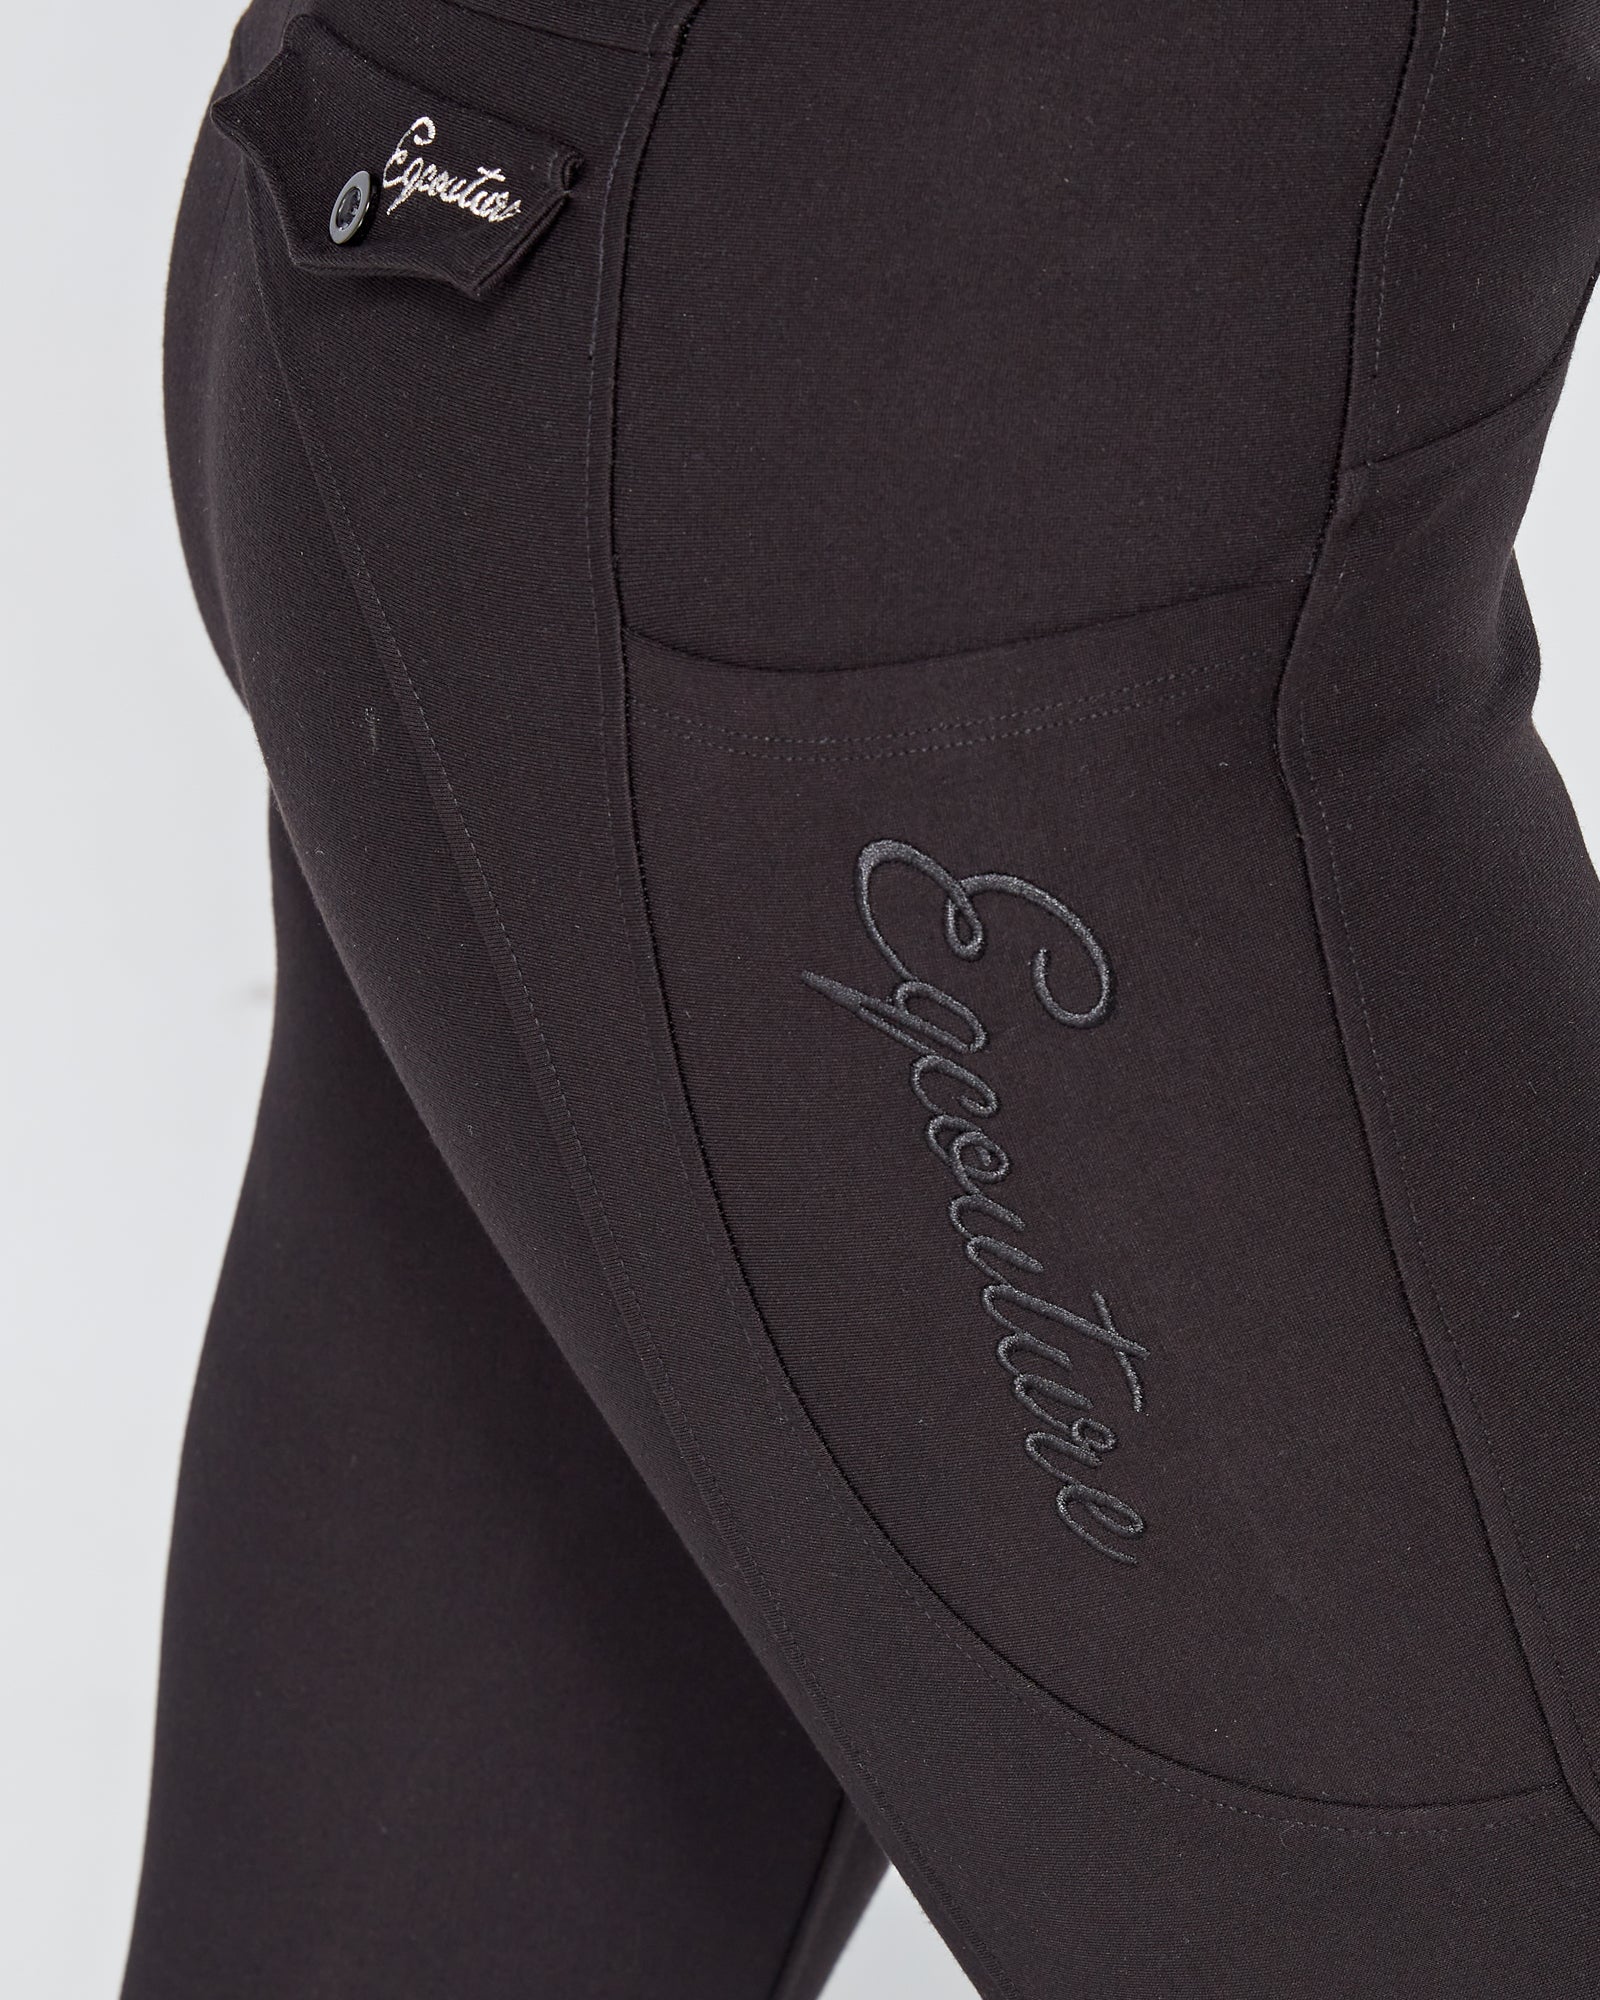 Premium Hybrid Breeches - CLASSIC BLACK (NO GRIP)